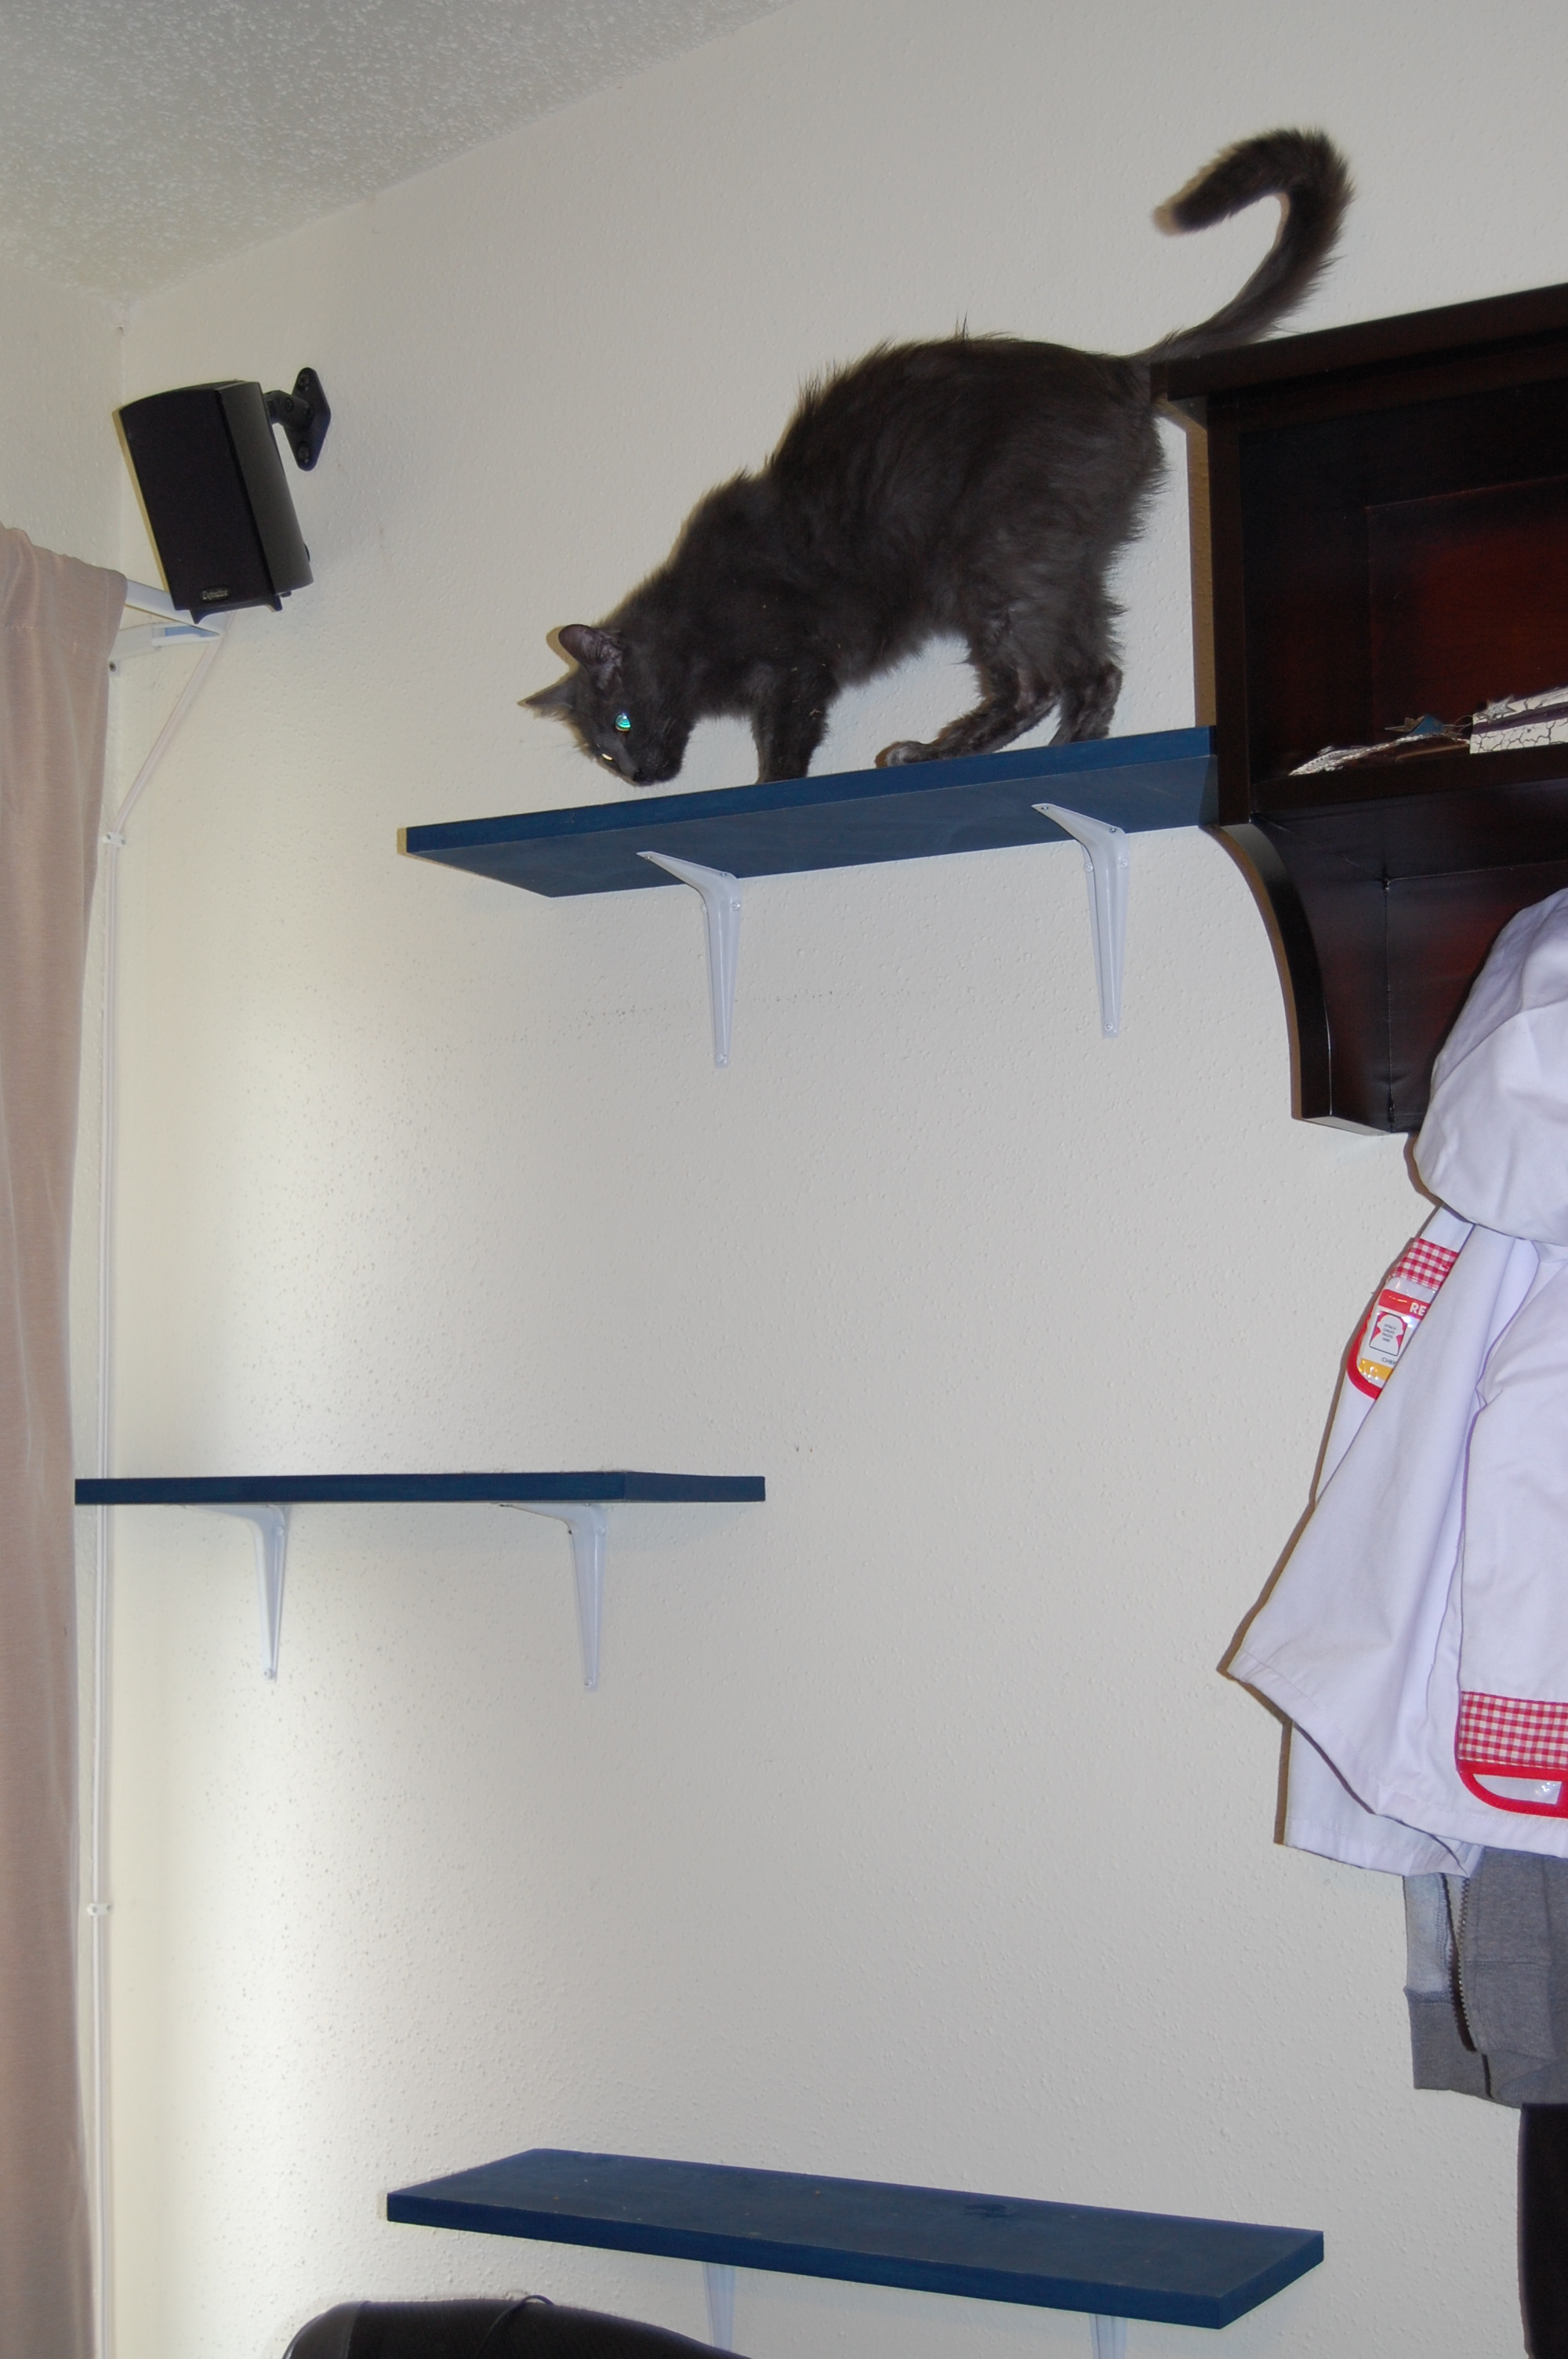 Best ideas about Cat Shelves DIY
. Save or Pin Cat Shelves DIY sensiblysara Now.